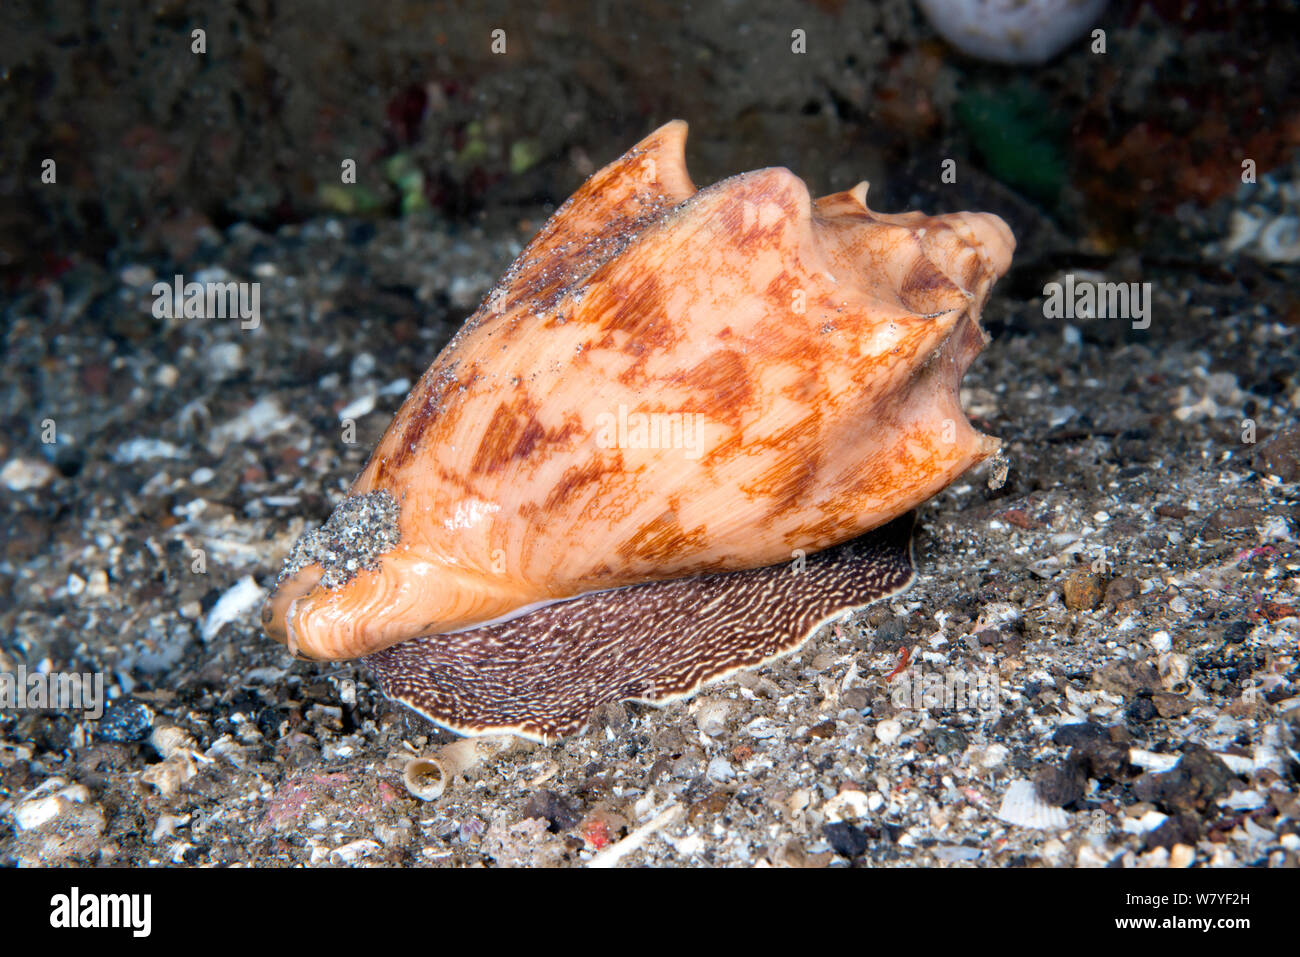 Bat volute predatory sea snail (Cymbiola vespertilio)  Lembeh Strait, North Sulawesi, Indonesia. Stock Photo